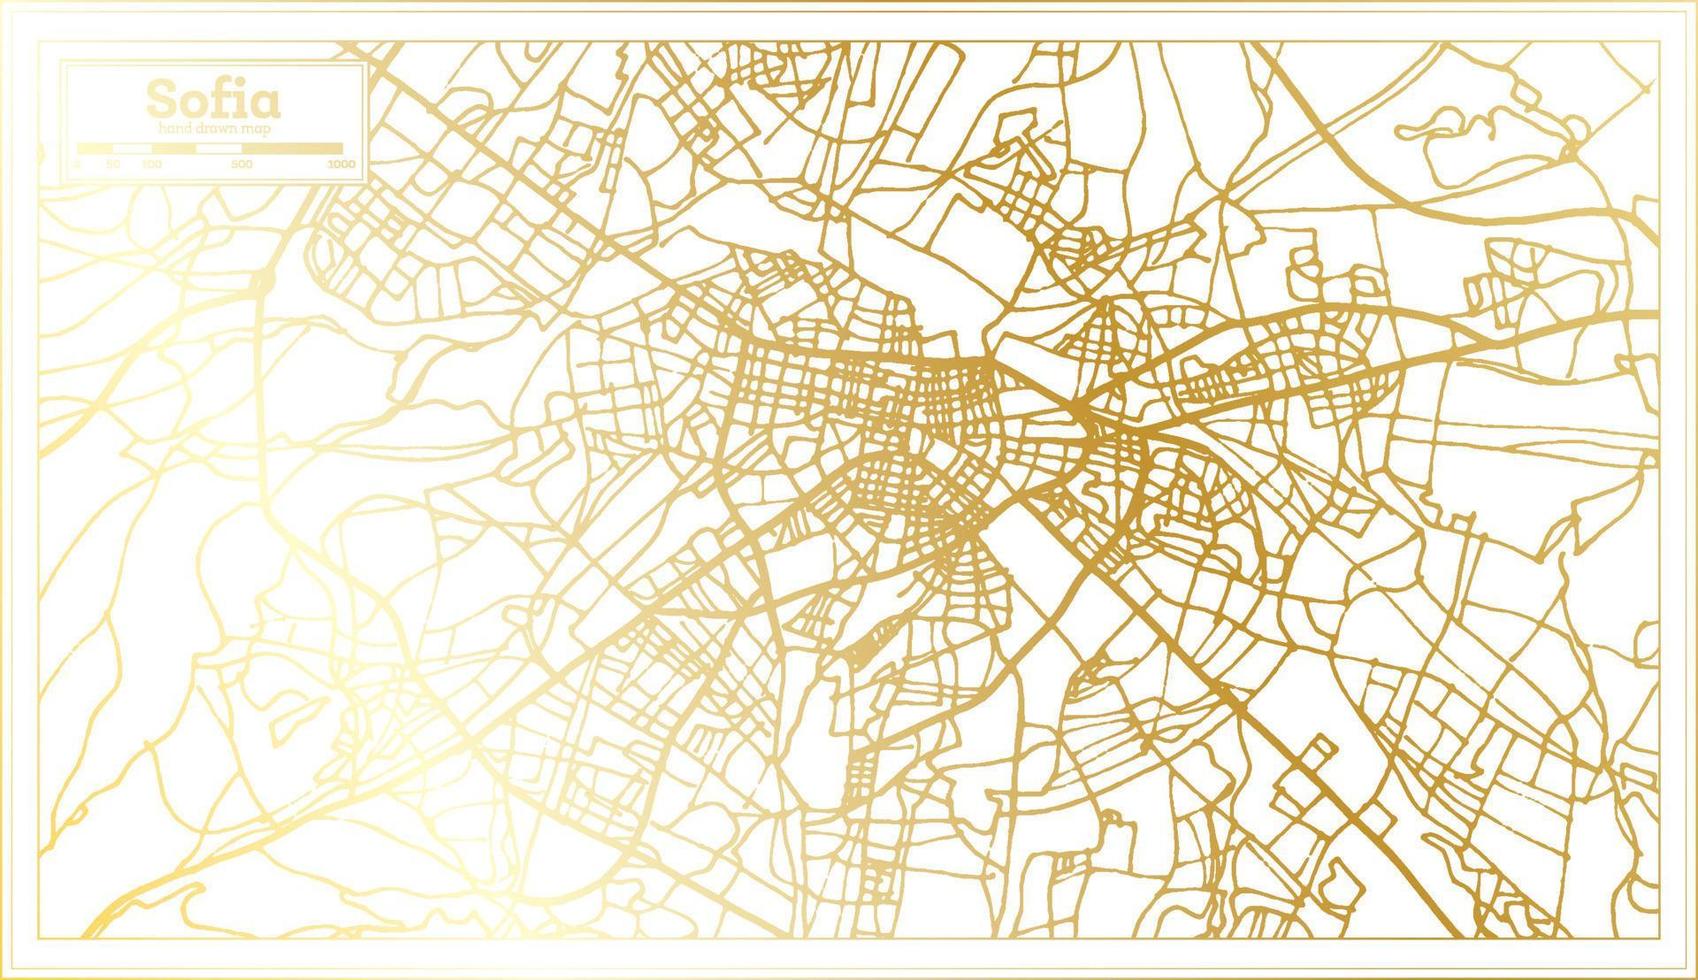 Sofia Bulgarien Stadtplan im Retro-Stil in goldener Farbe. Übersichtskarte. vektor